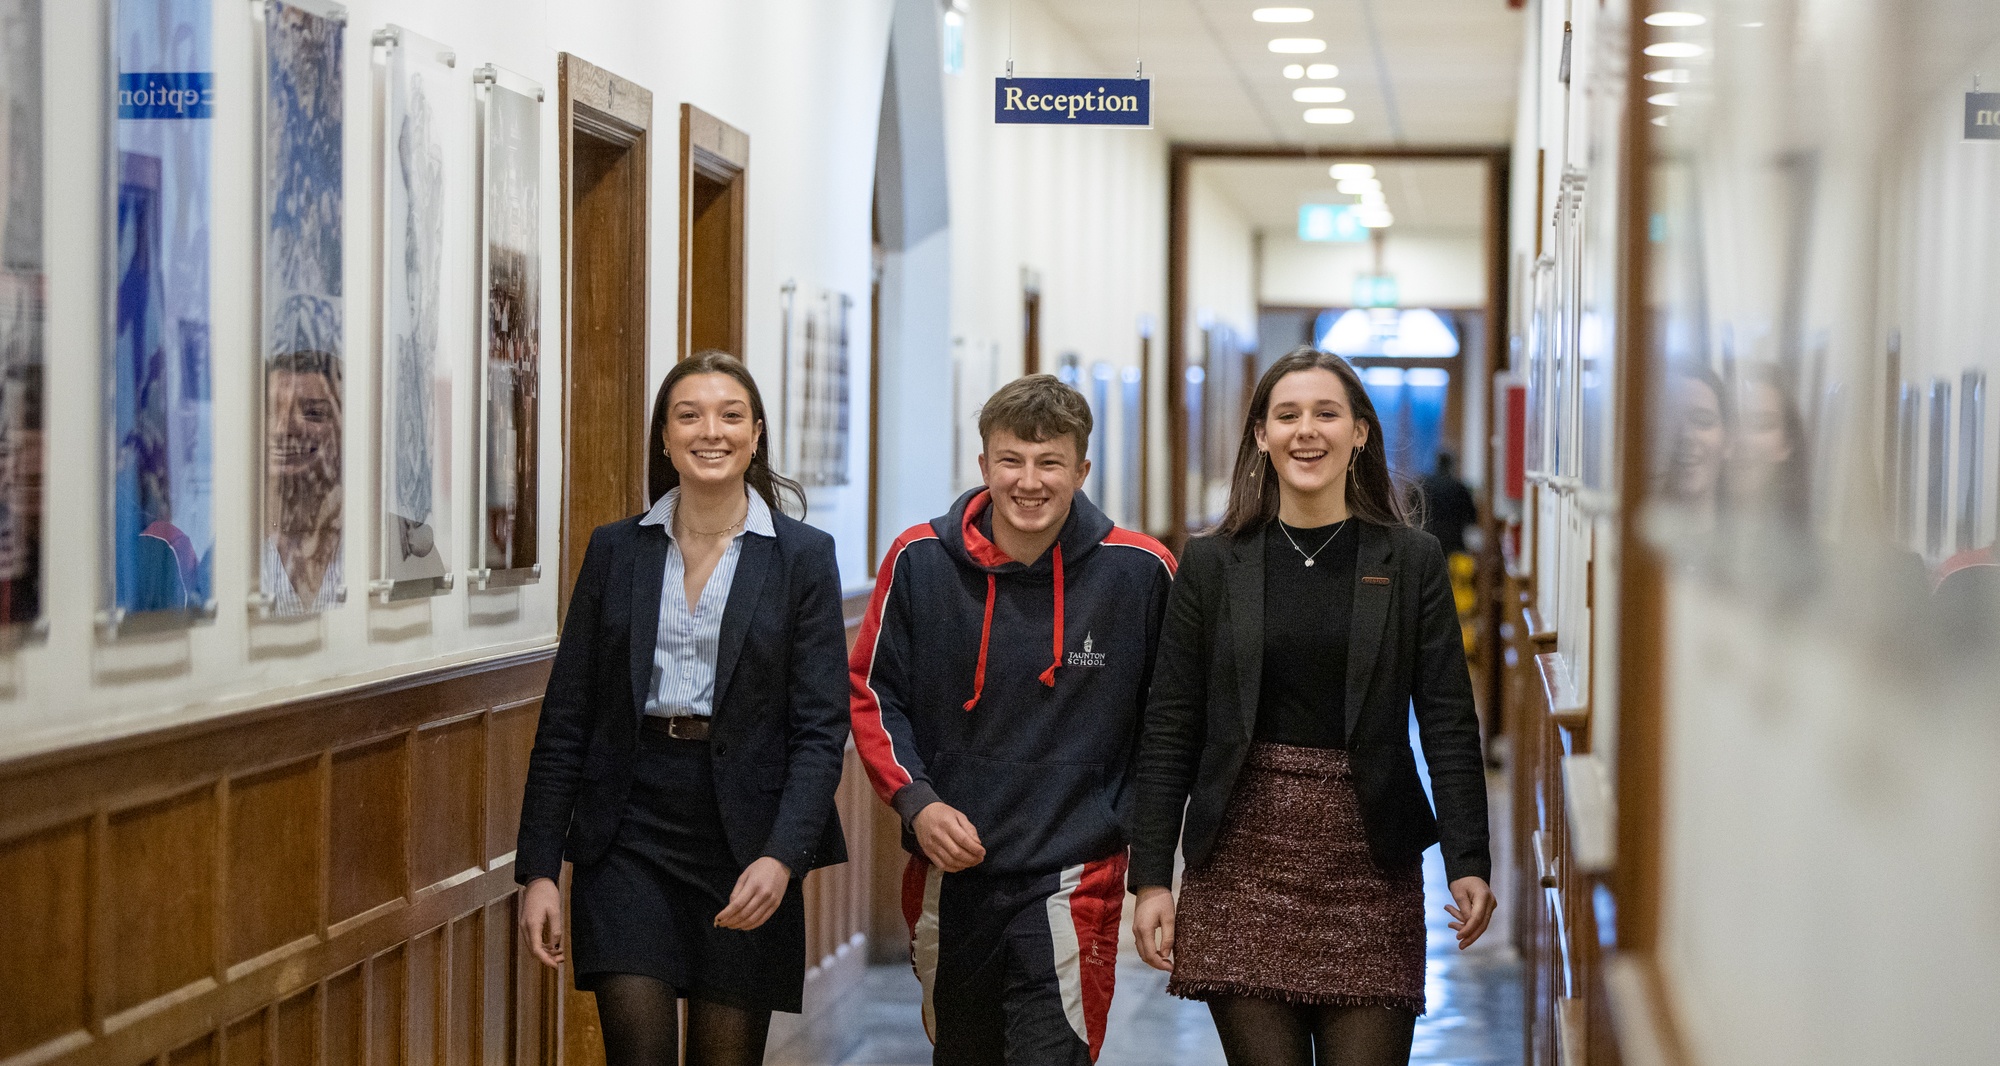 Three students walking through the corridor